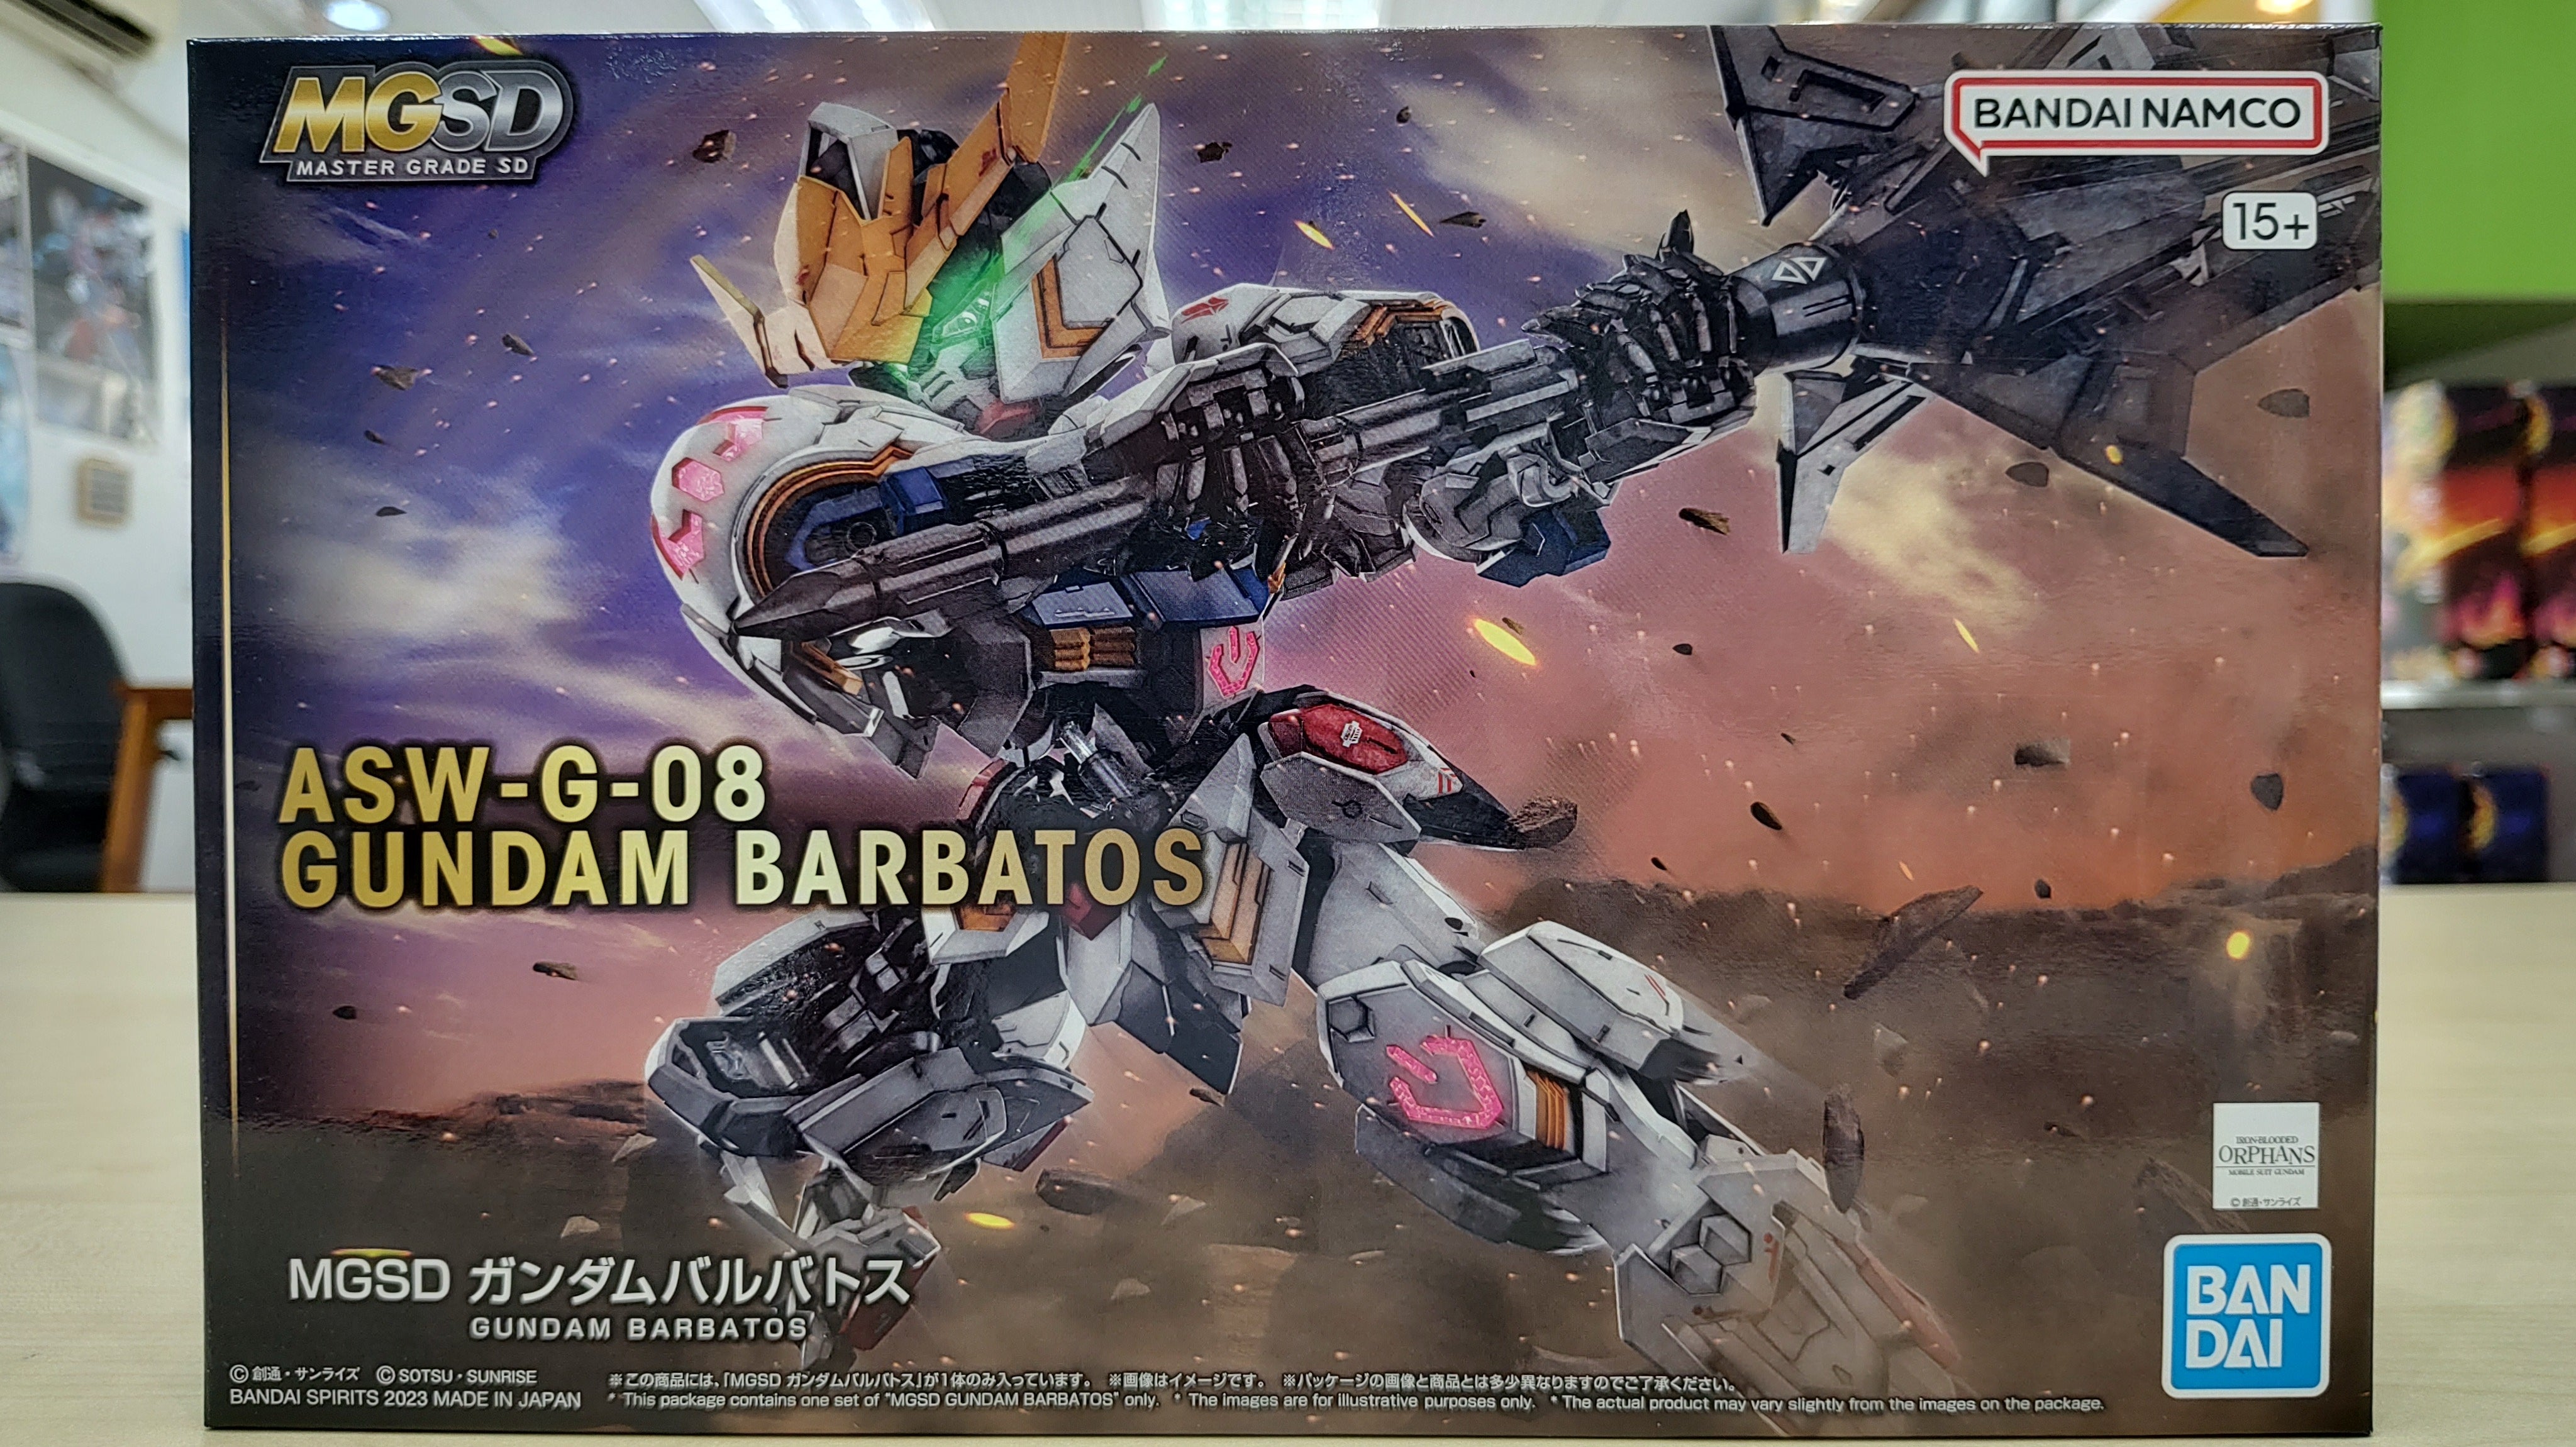 MGSD Gundam Barbatos